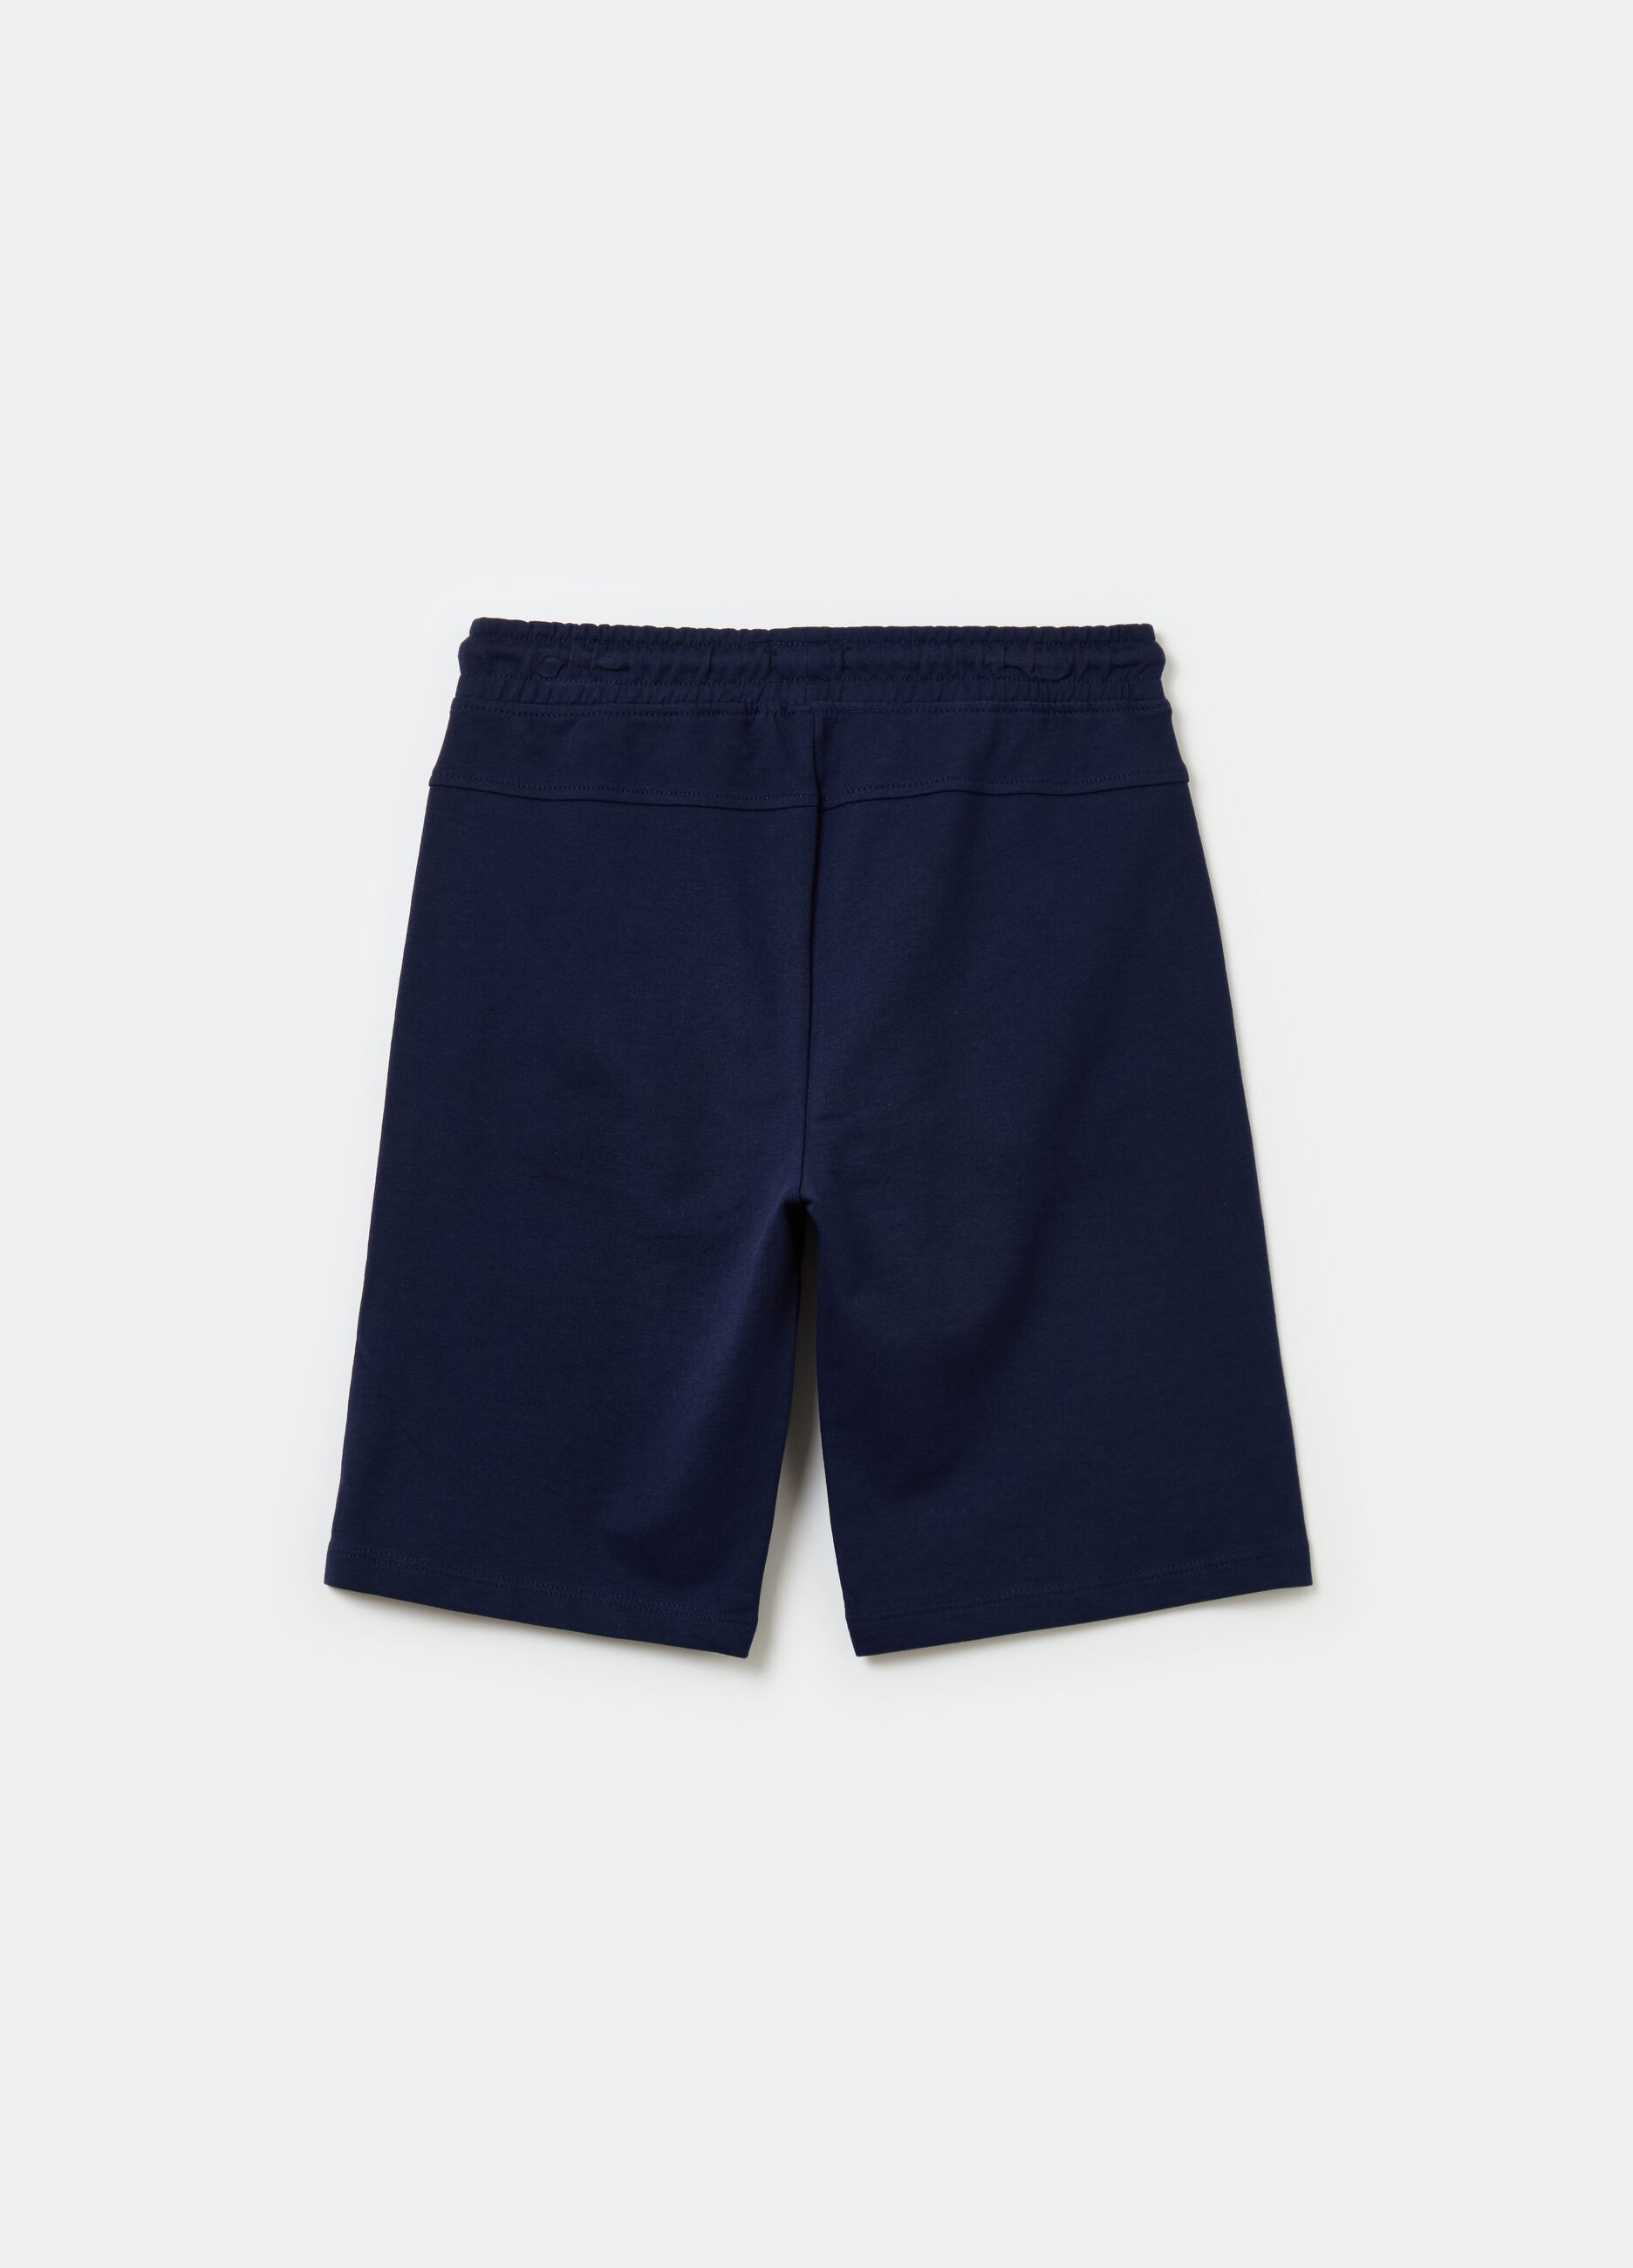 Bermuda shorts in fleece with college print